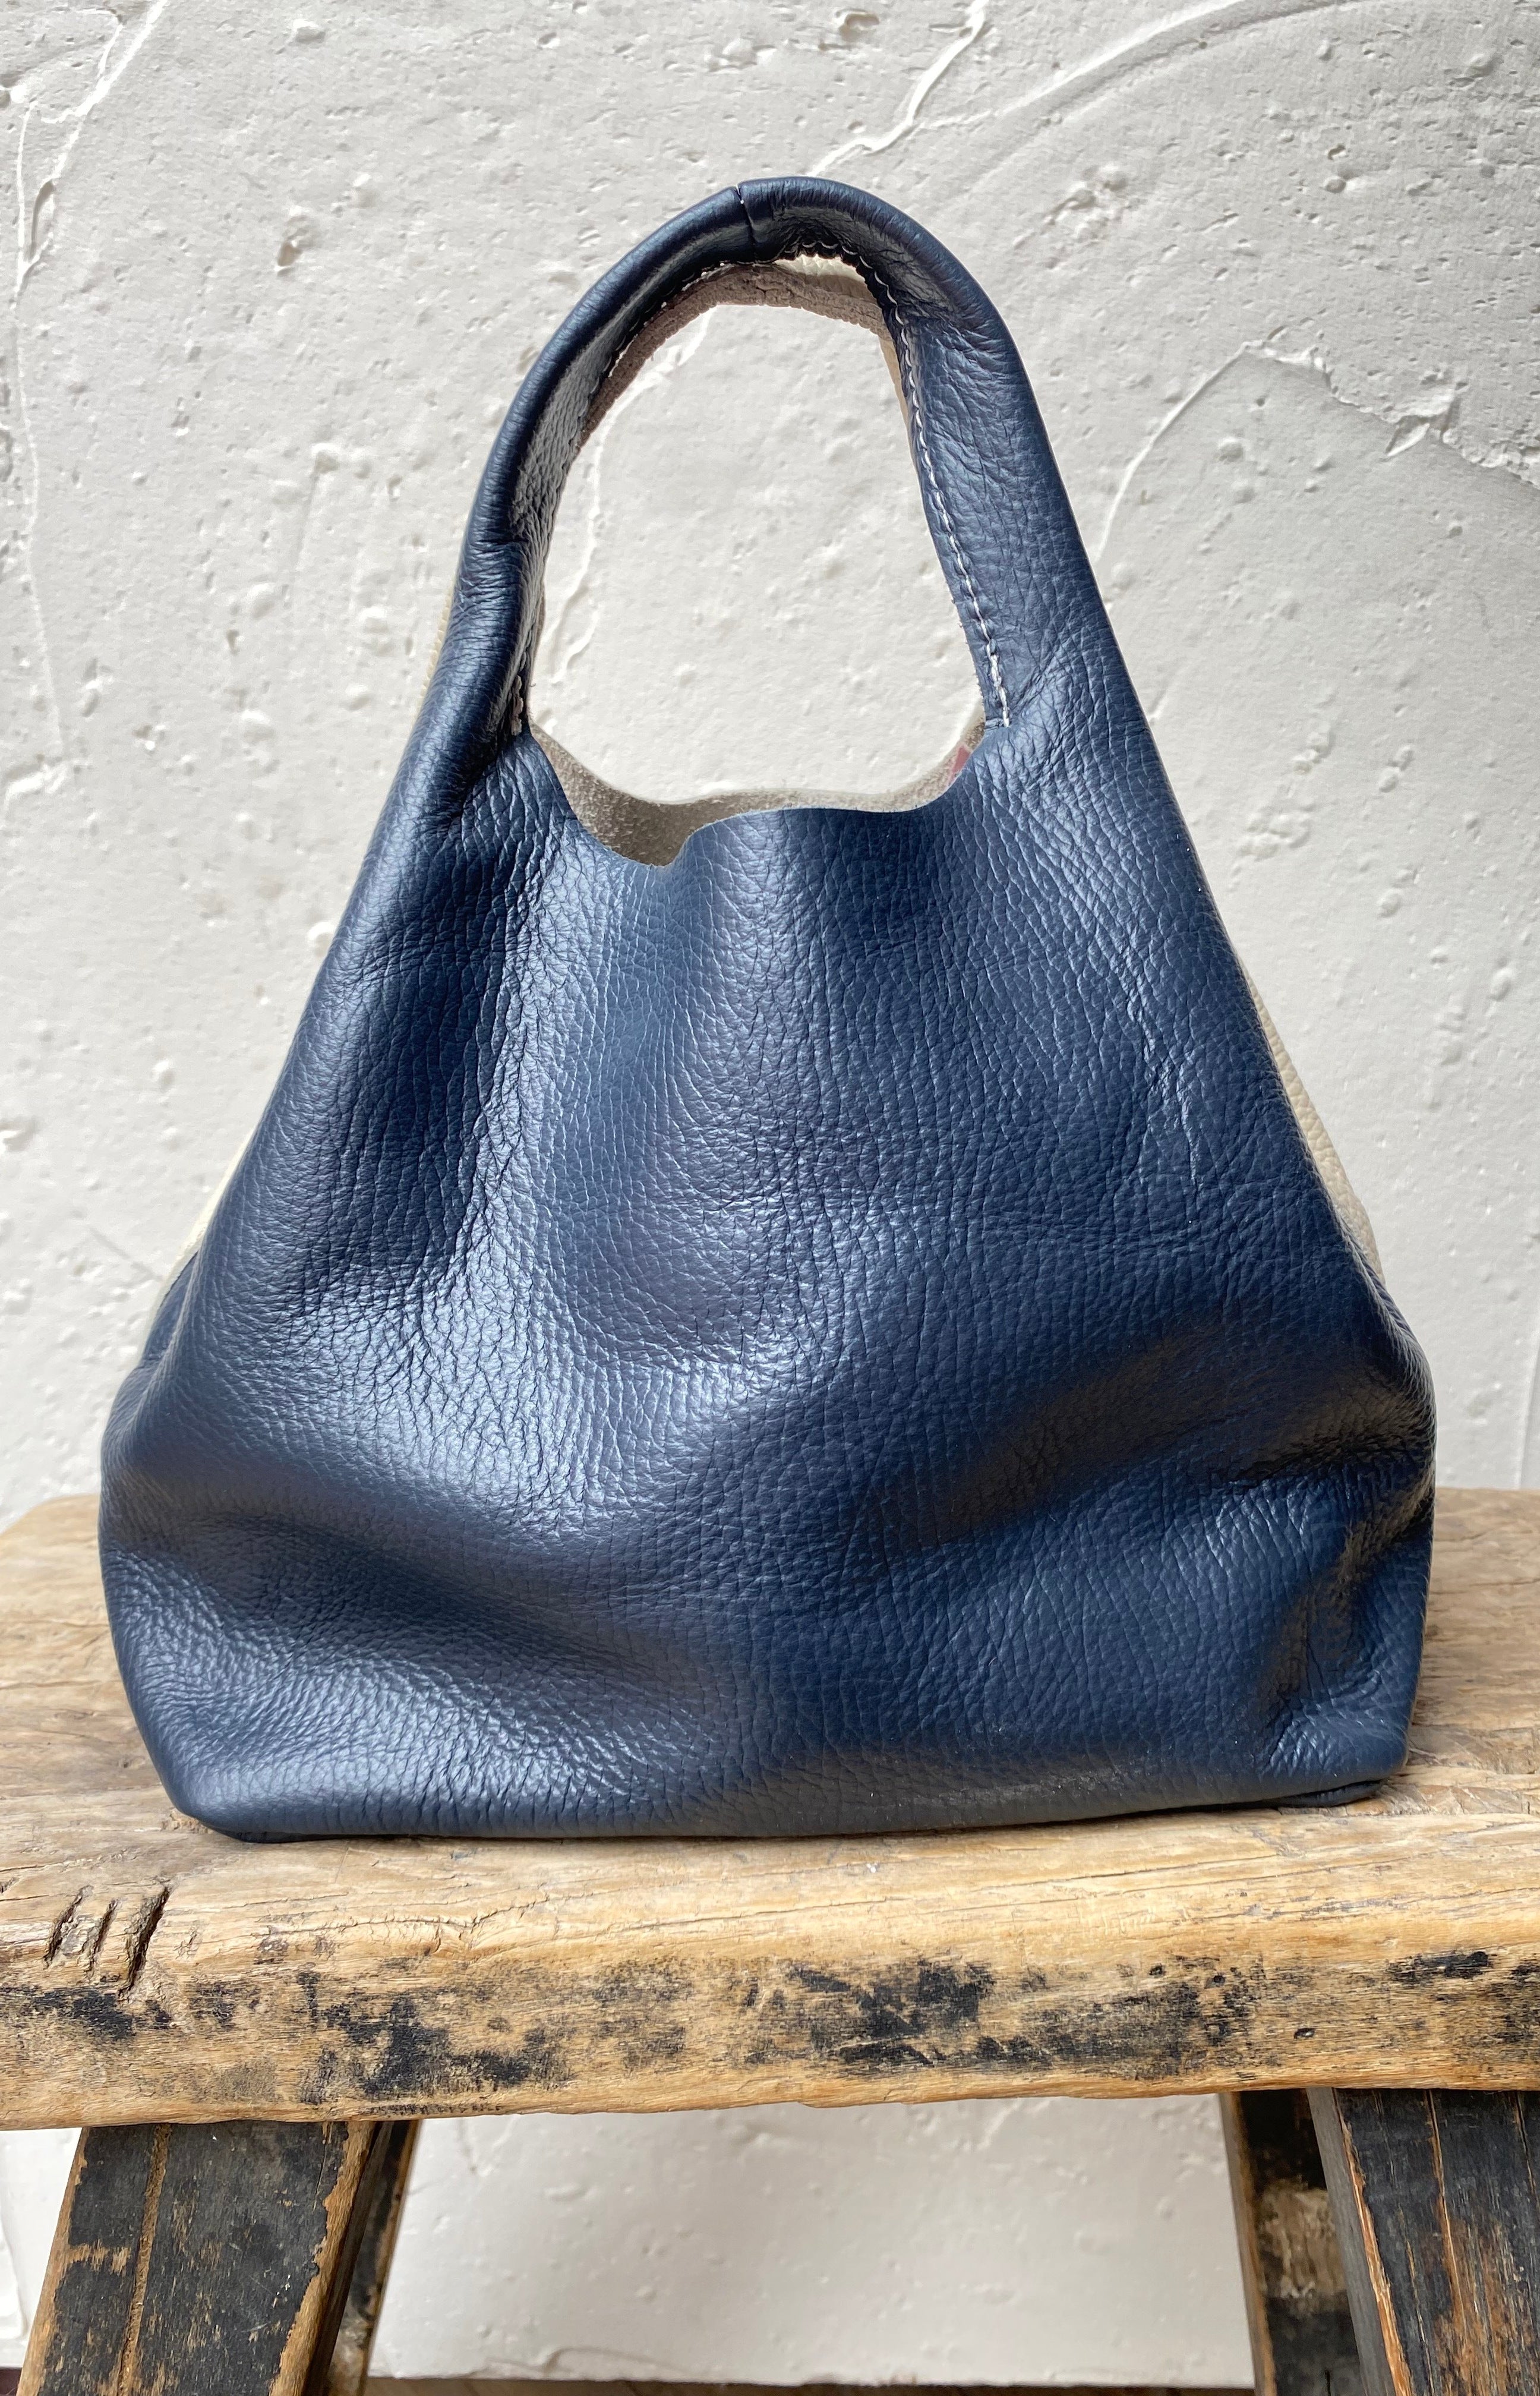 Barrow Leather Bag - Ivory/Navy